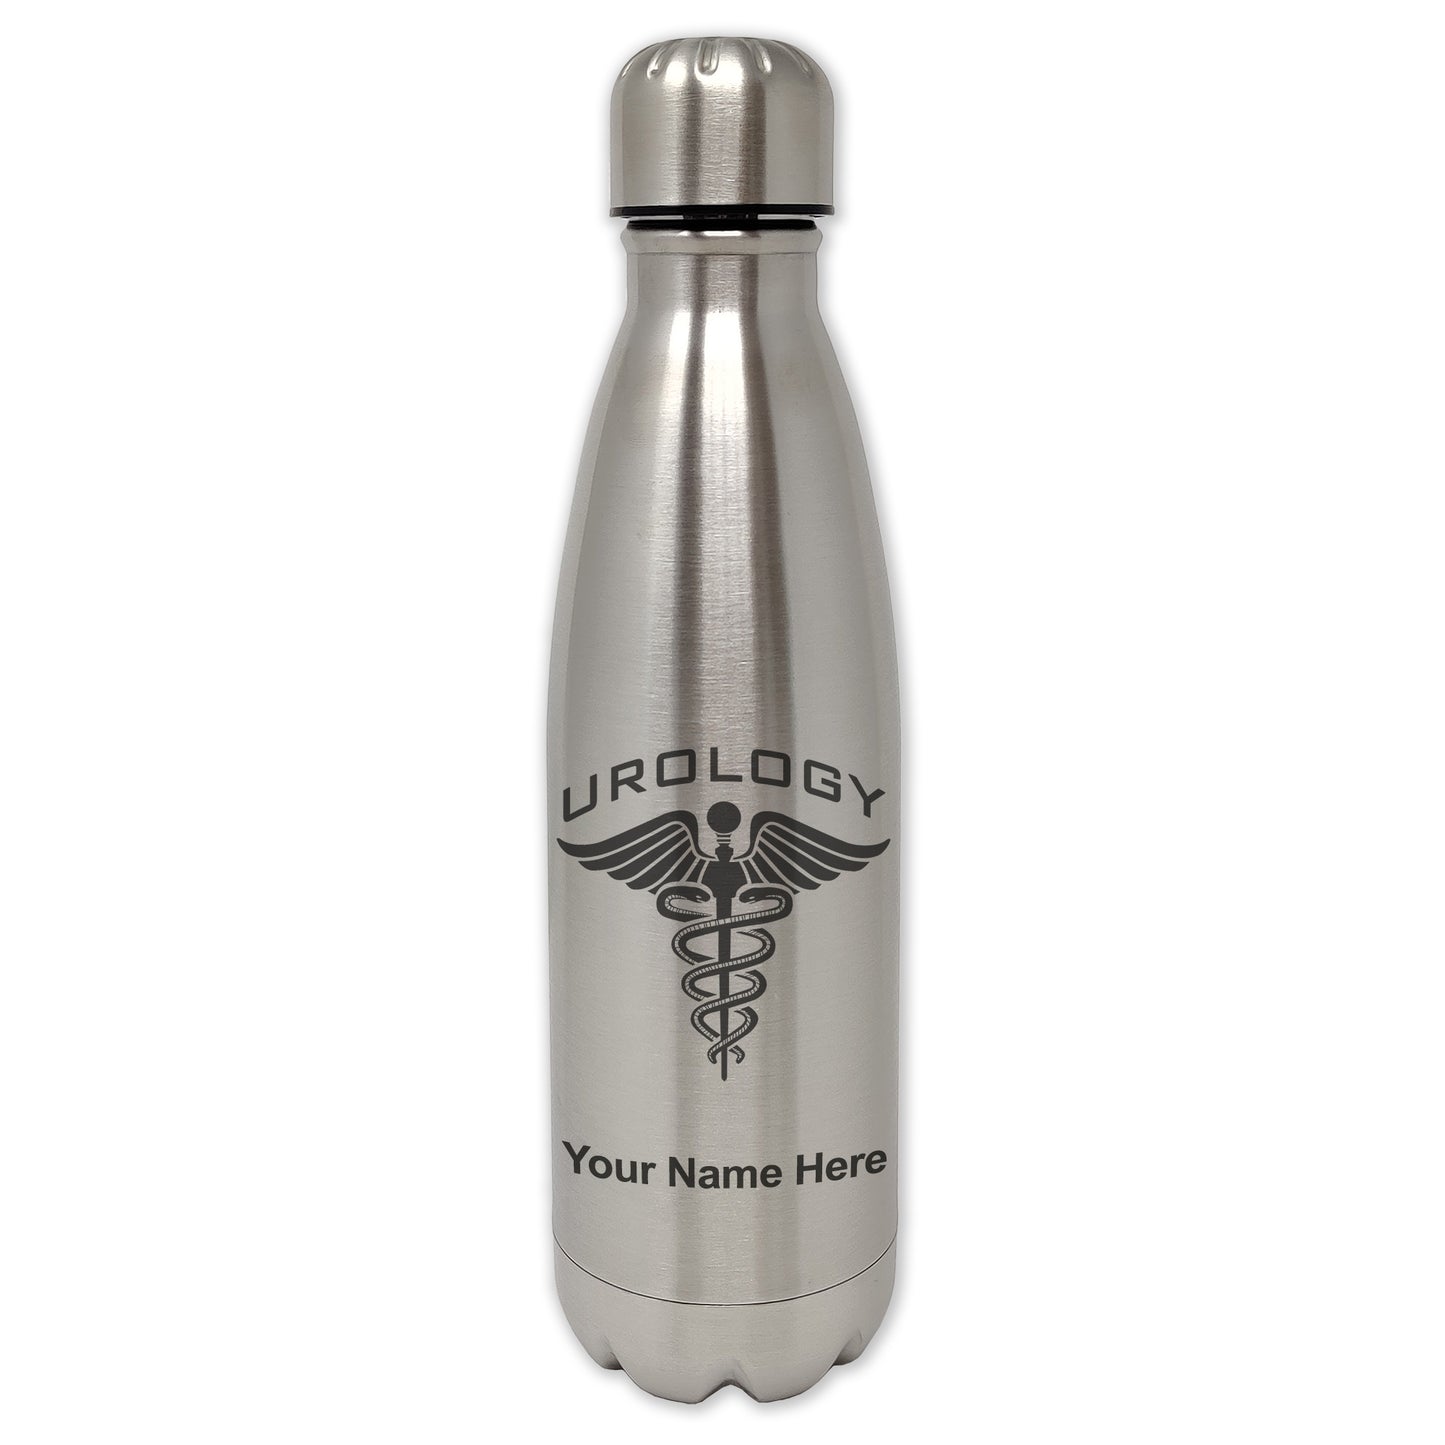 LaserGram Single Wall Water Bottle, Urology, Personalized Engraving Included